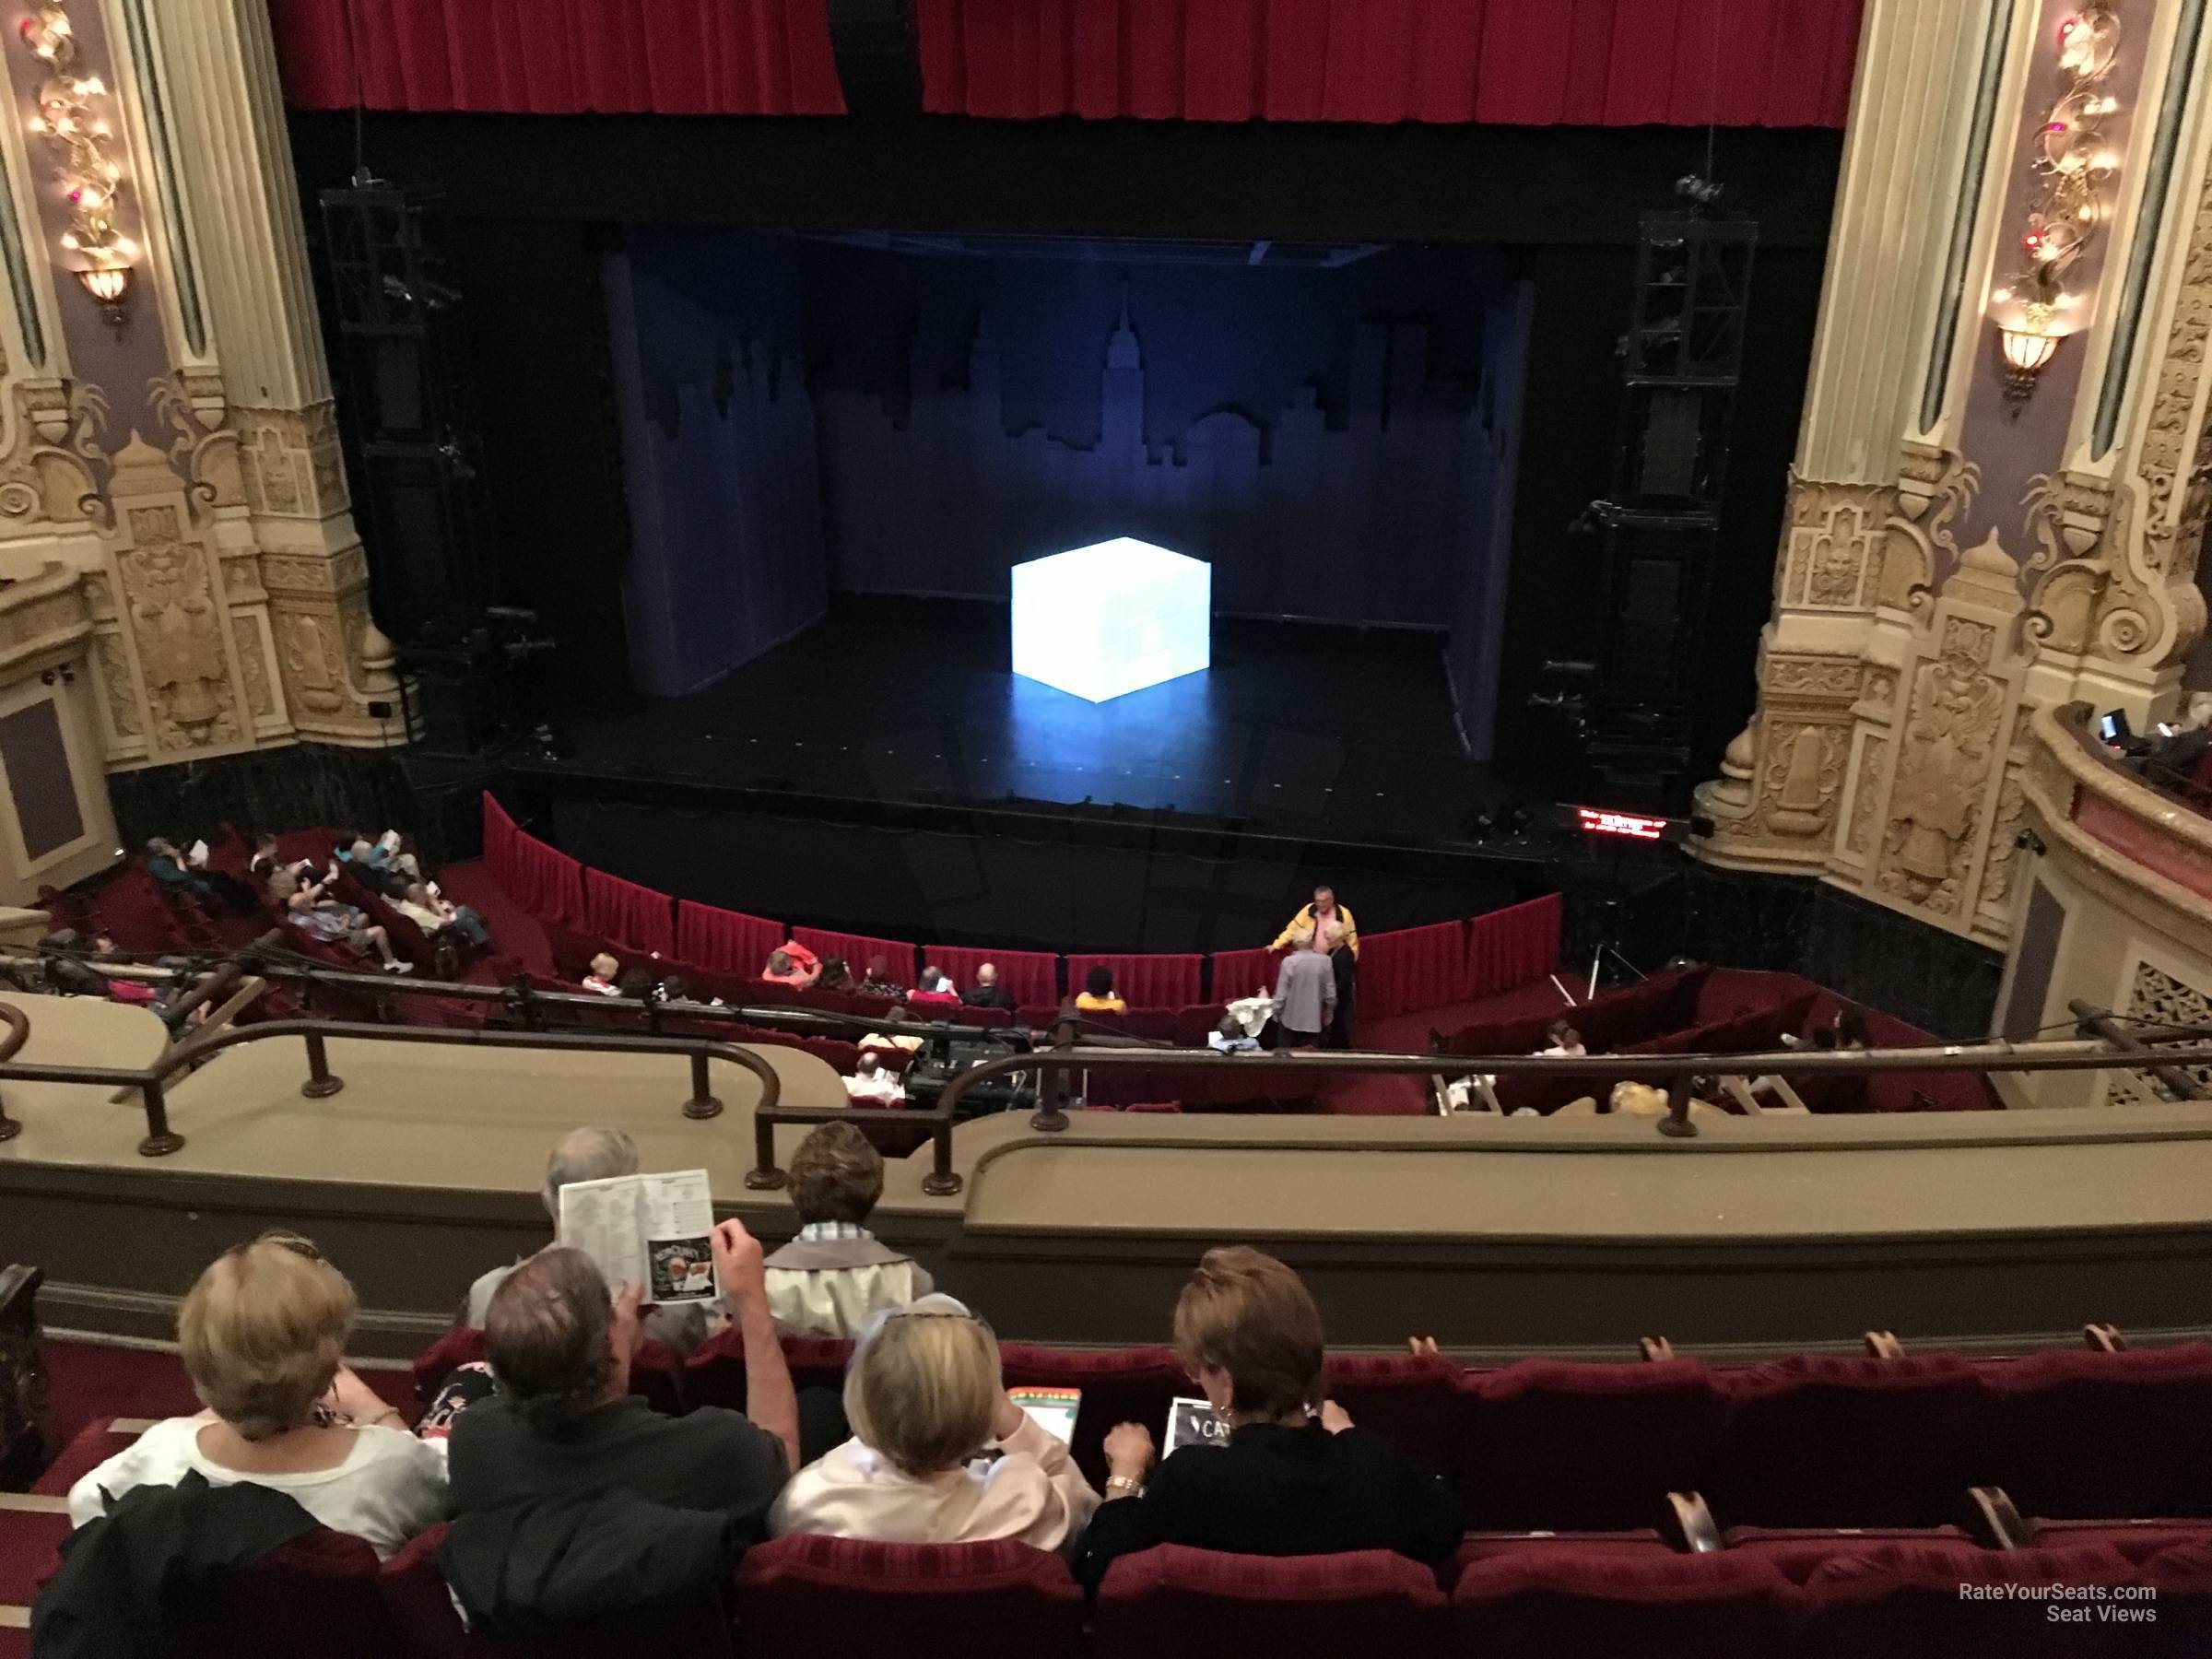 loge right center, row d seat view  - nederlander theatre (chicago)